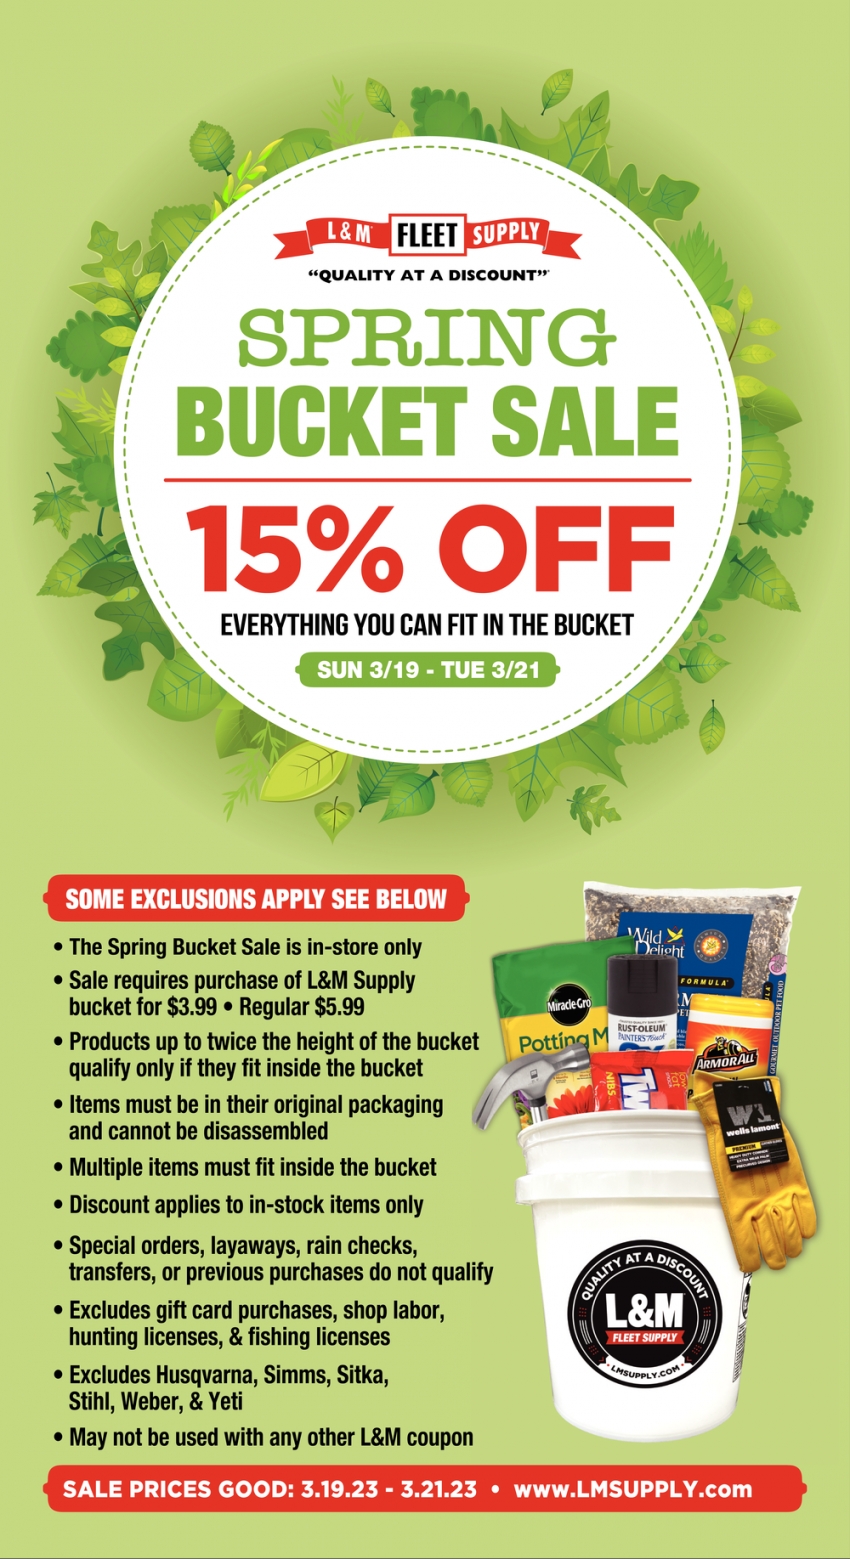 Spring Bucket Sale 15% OFF